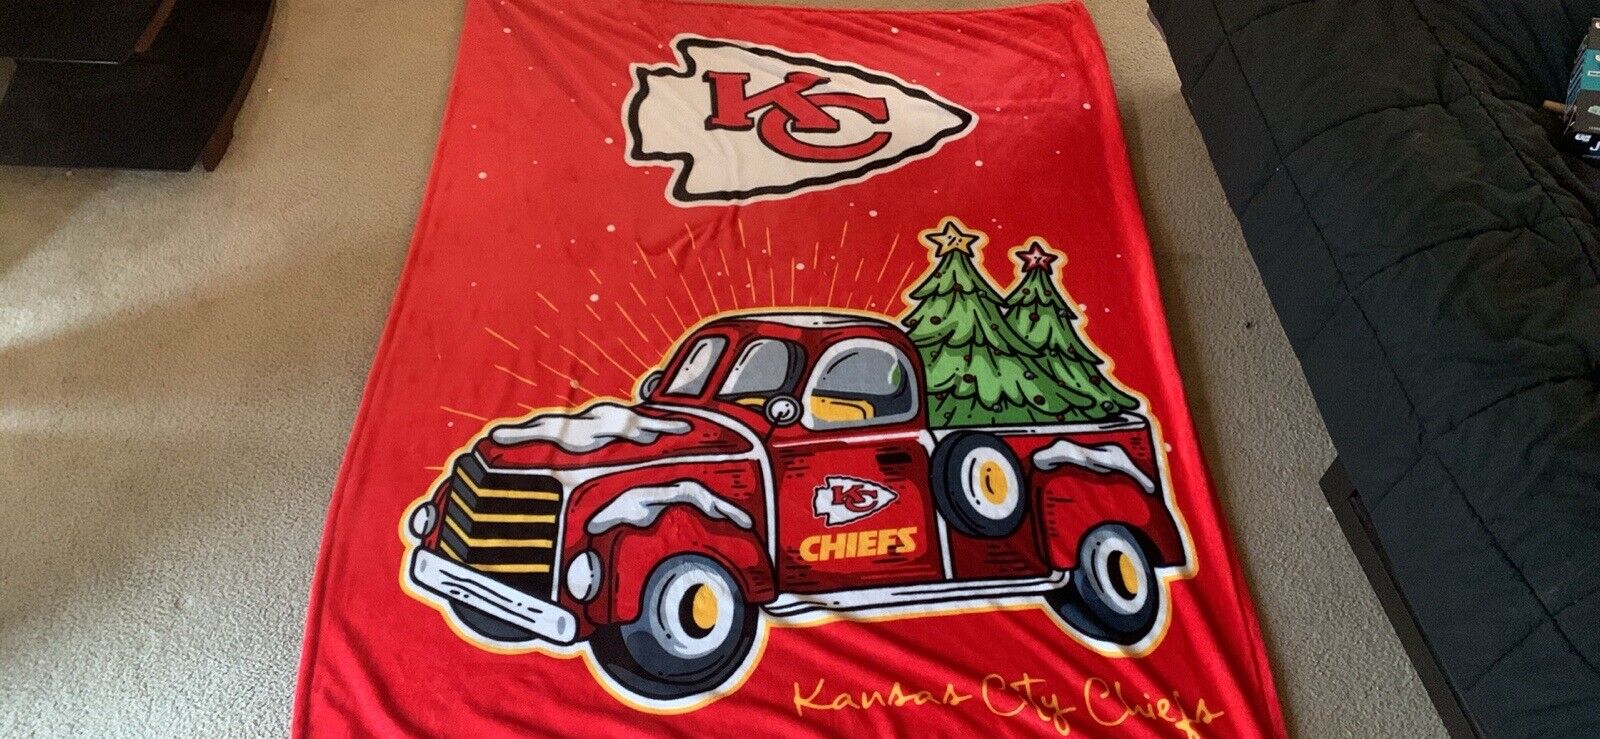 Kansas City Chief Blanket